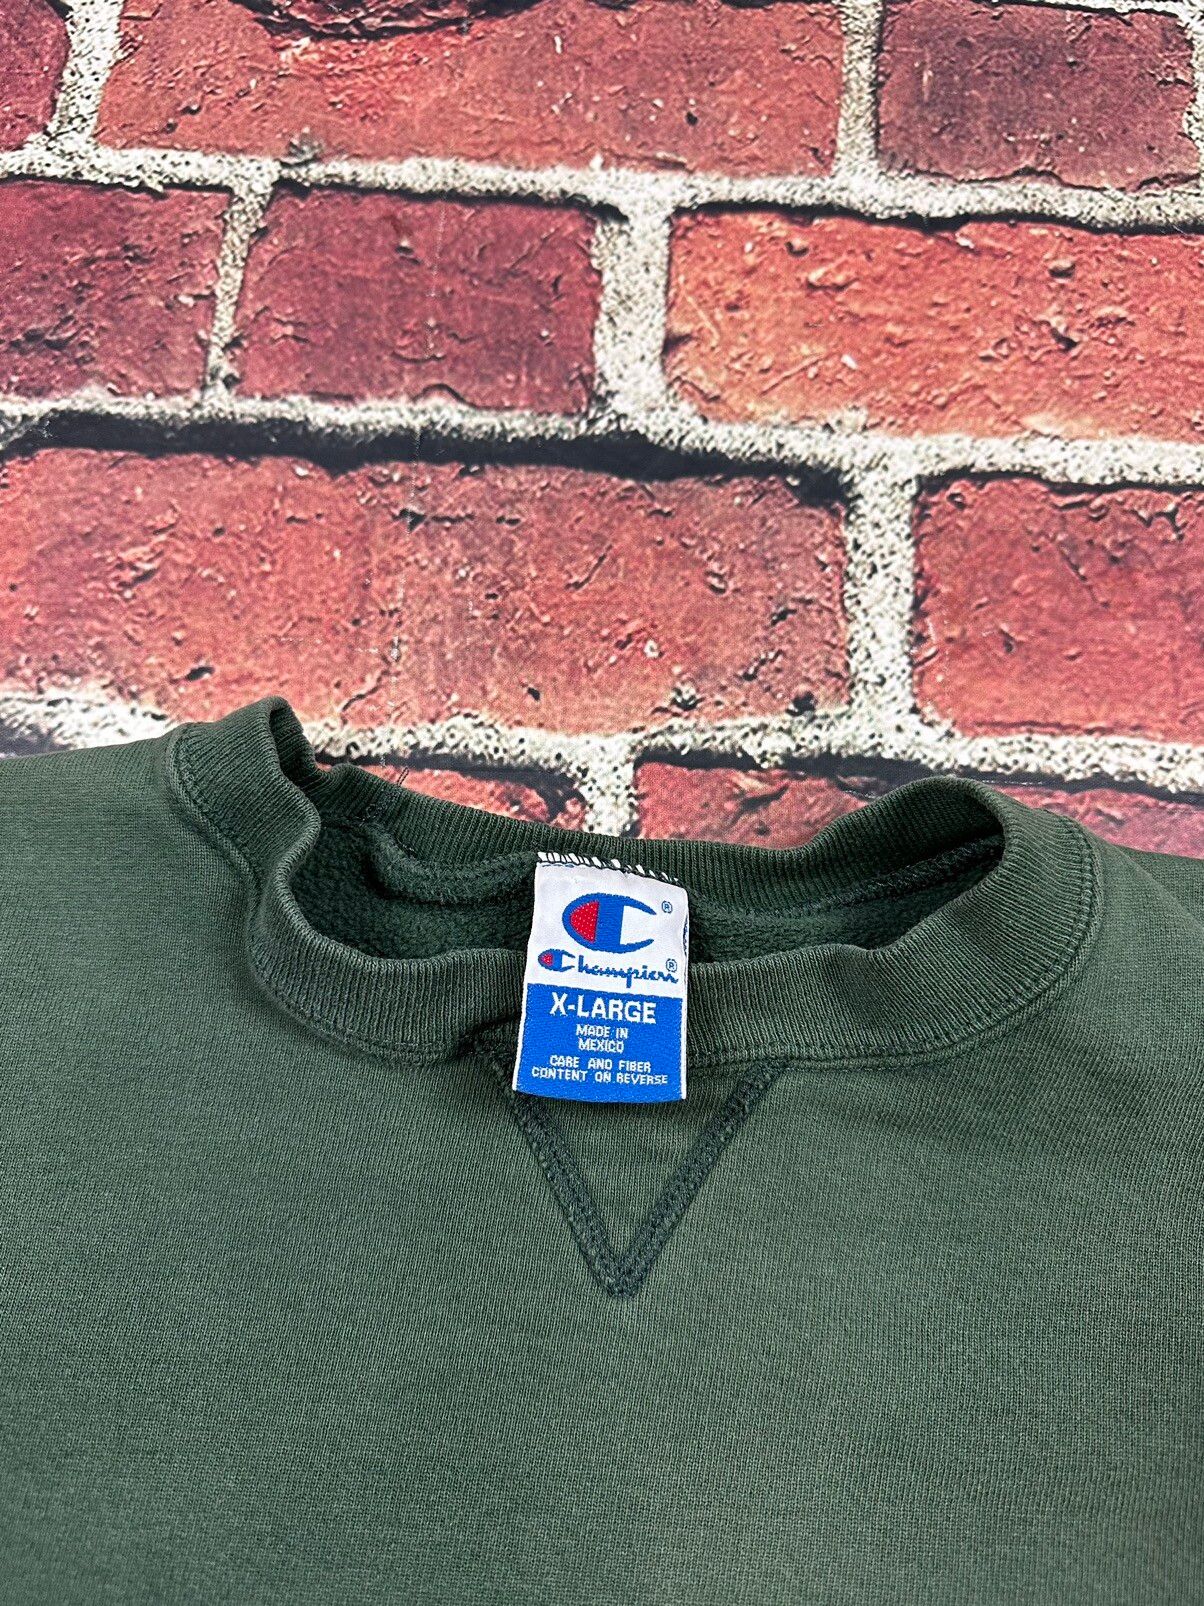 Vintage Vintage 90s Champion Sweatshirt Green Spell Out Crewneck Size US XL / EU 56 / 4 - 7 Thumbnail